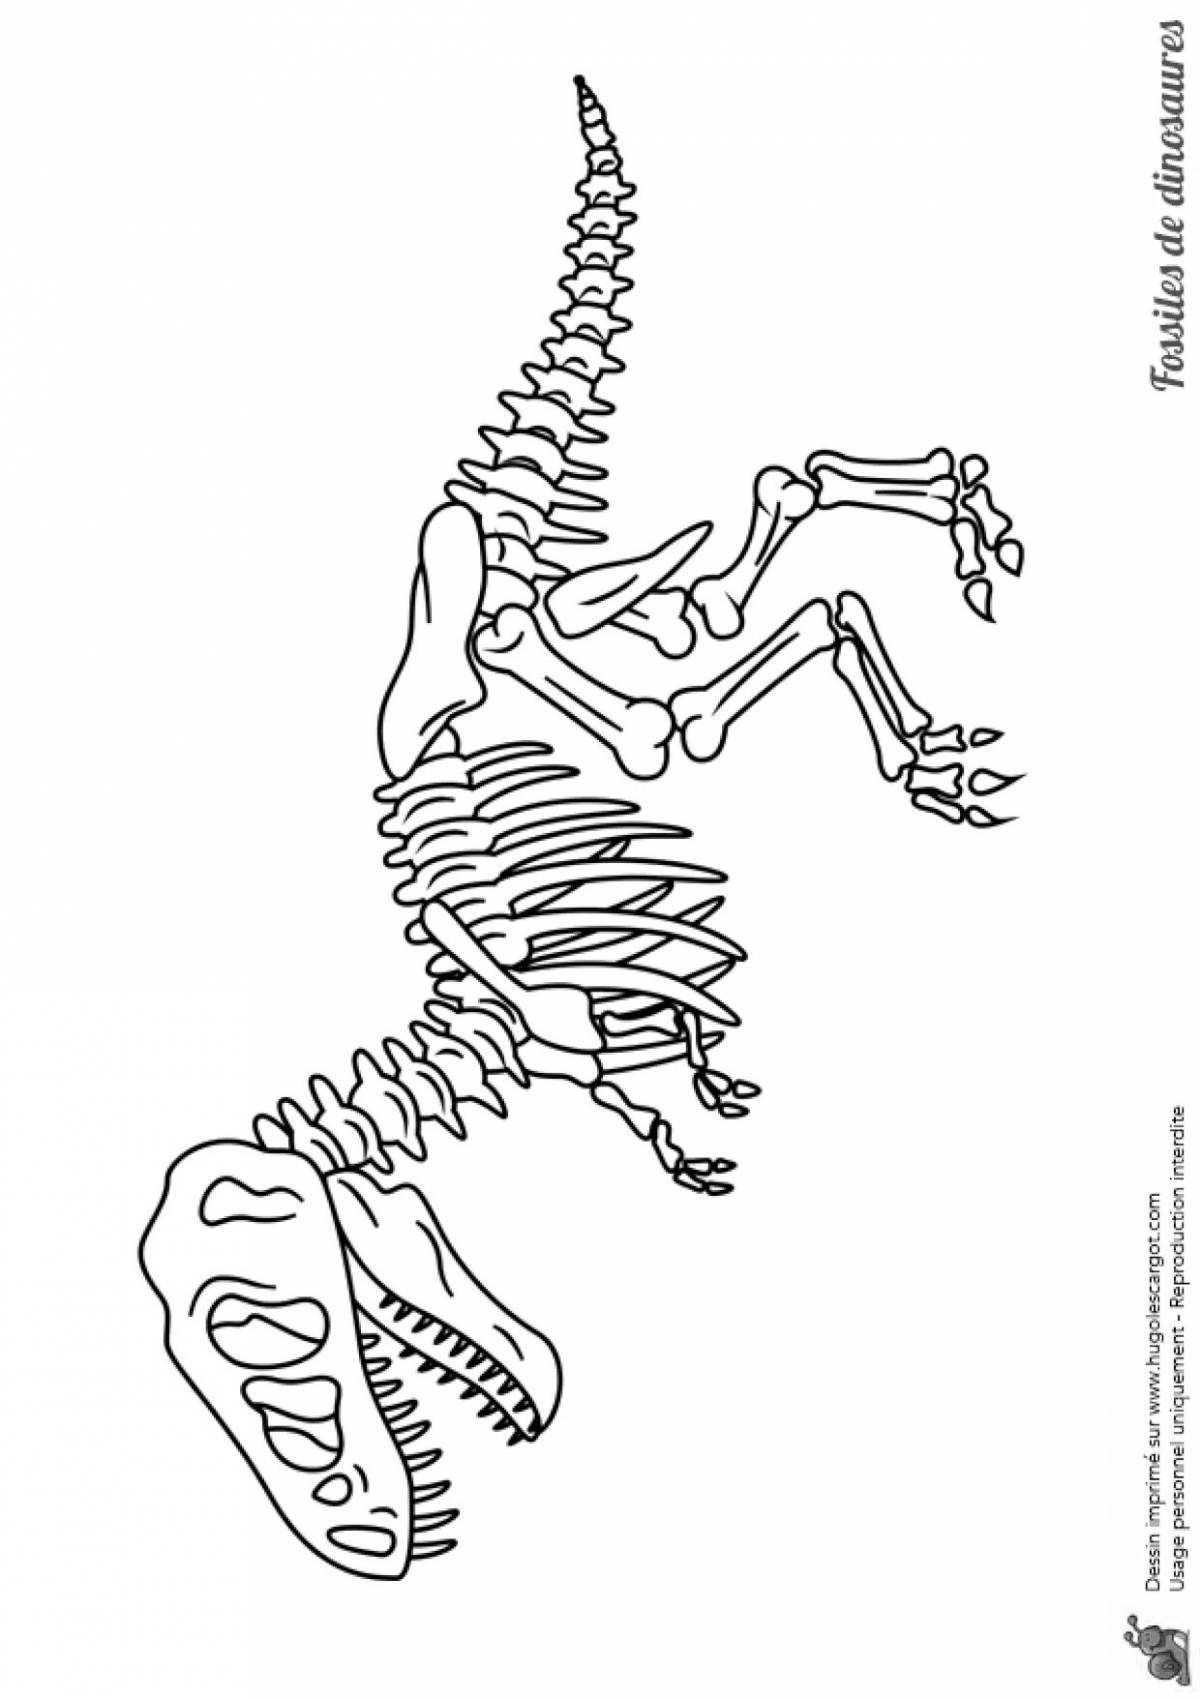 Amazing skeleton coloring page